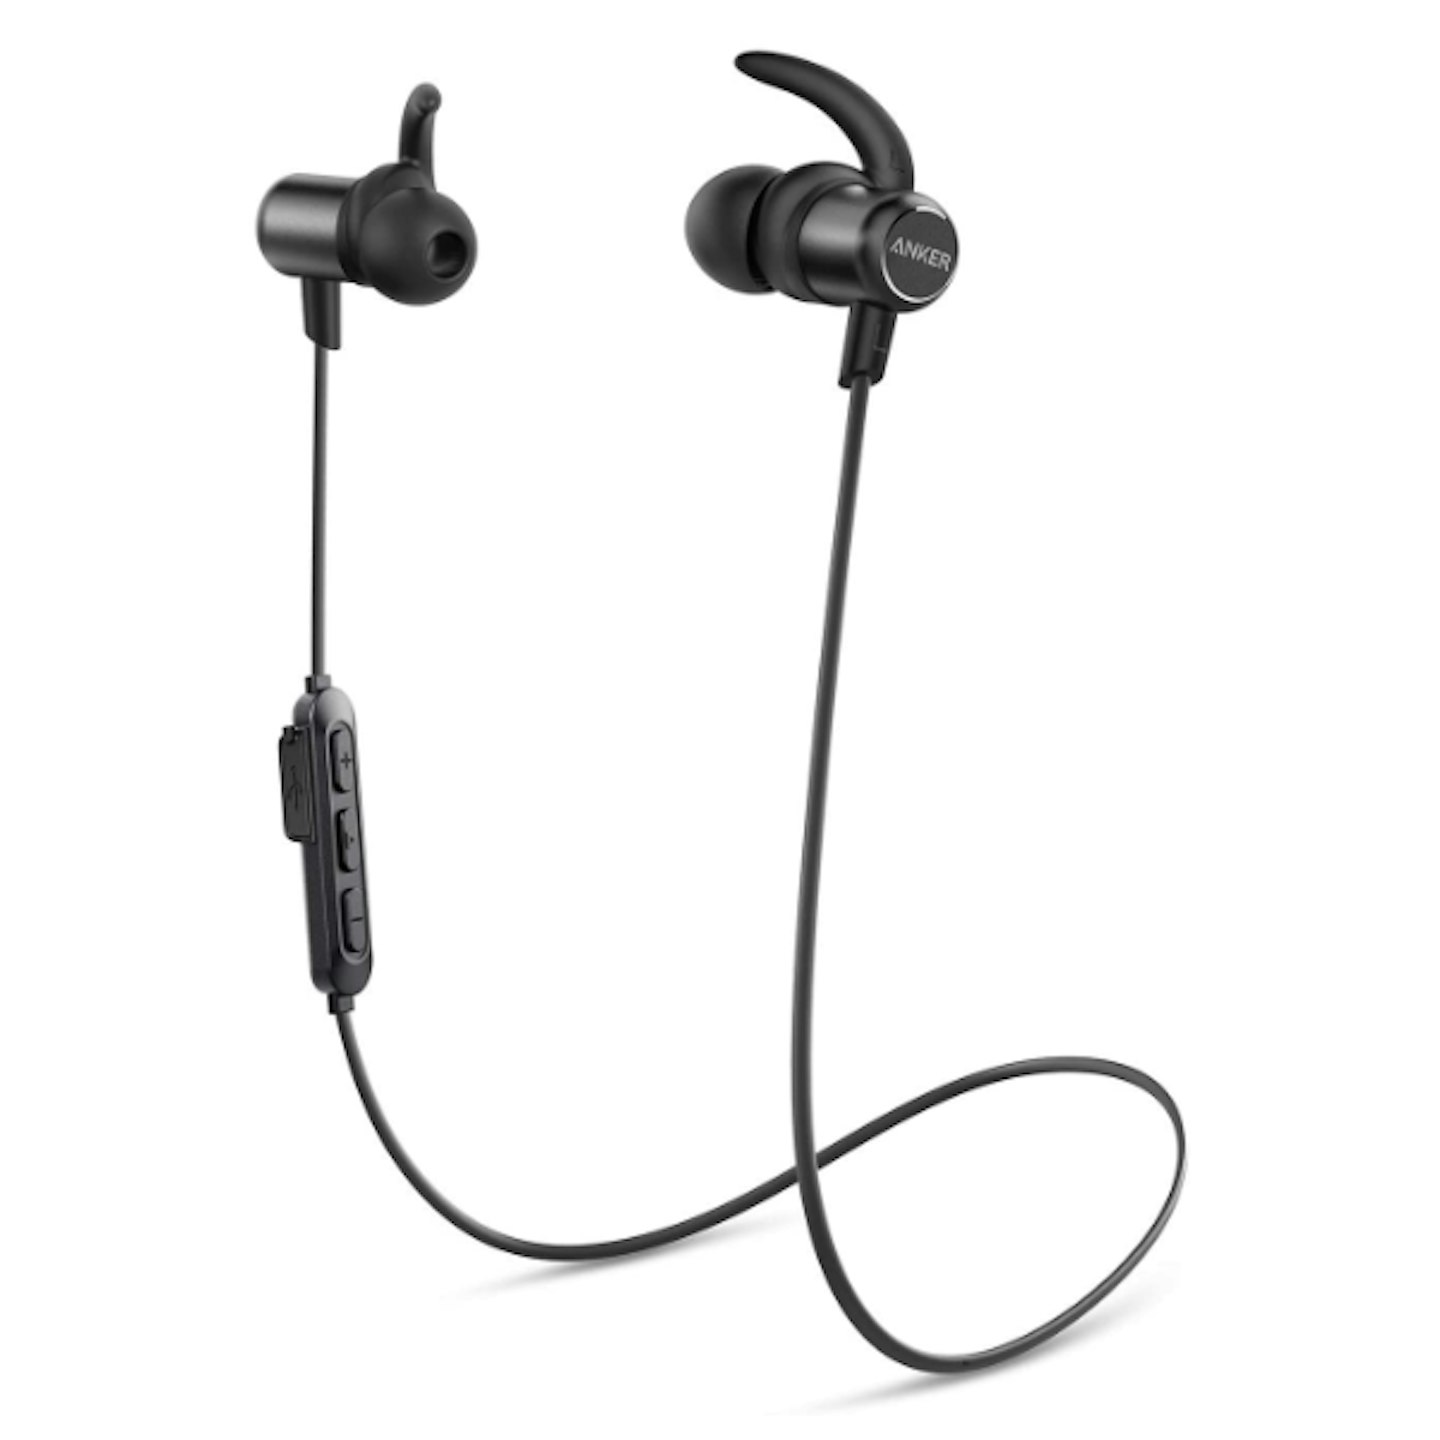 Anker Wireless SoundBud Ear Phones